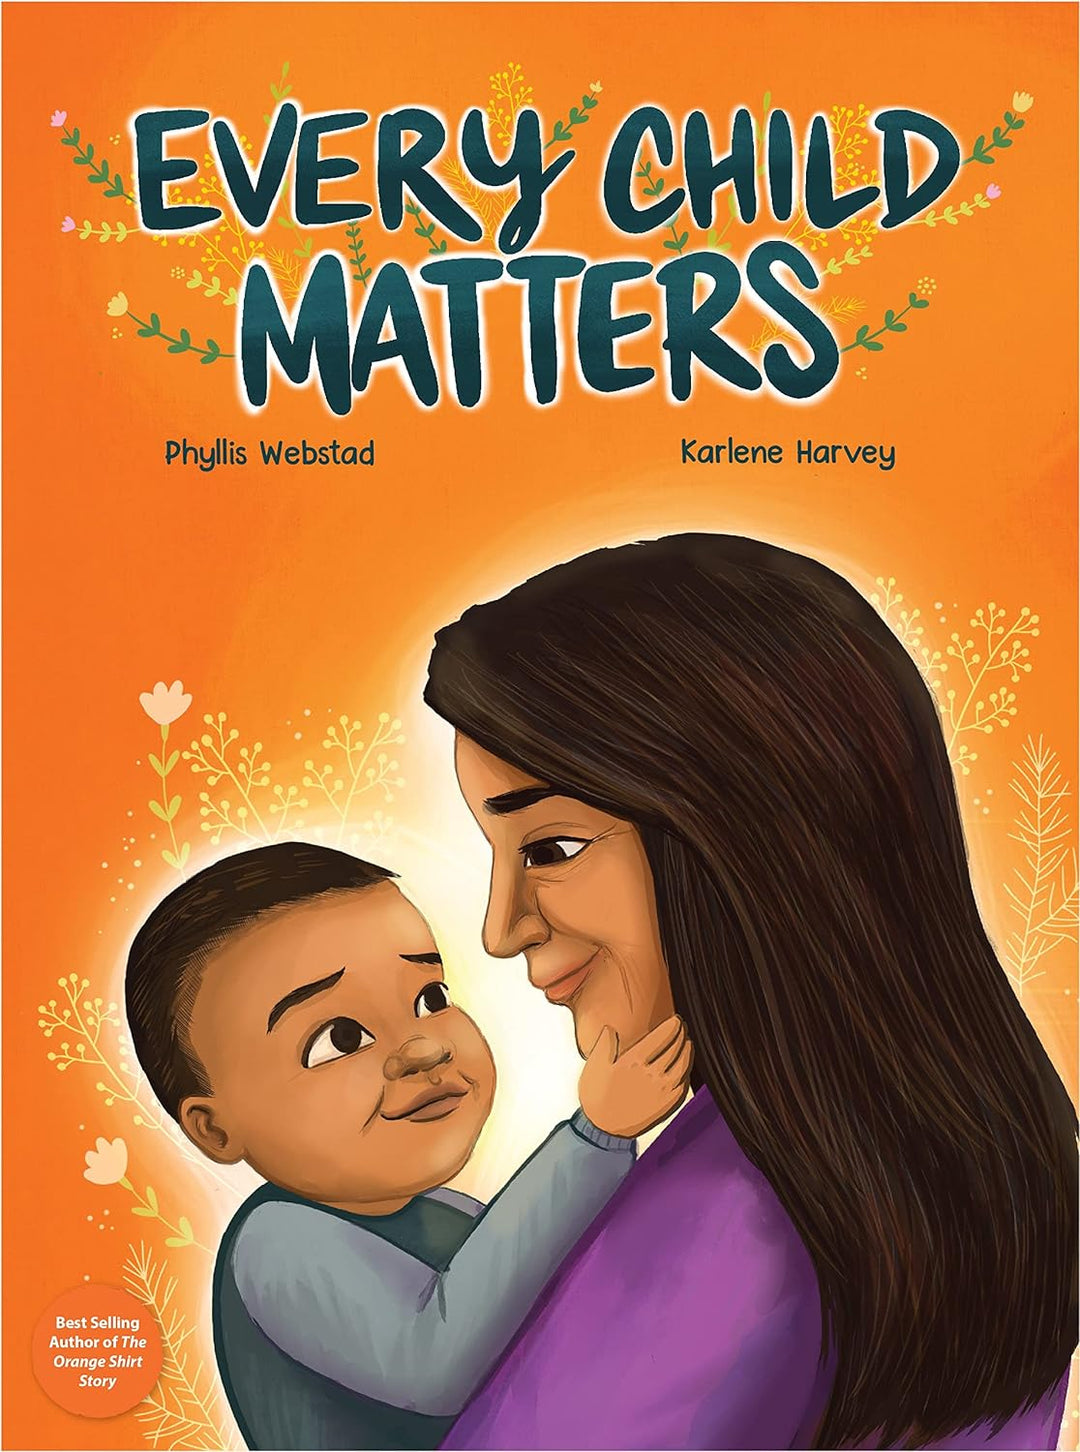 Every Child Matters by Phyllis Webstad & Karlene Harvey